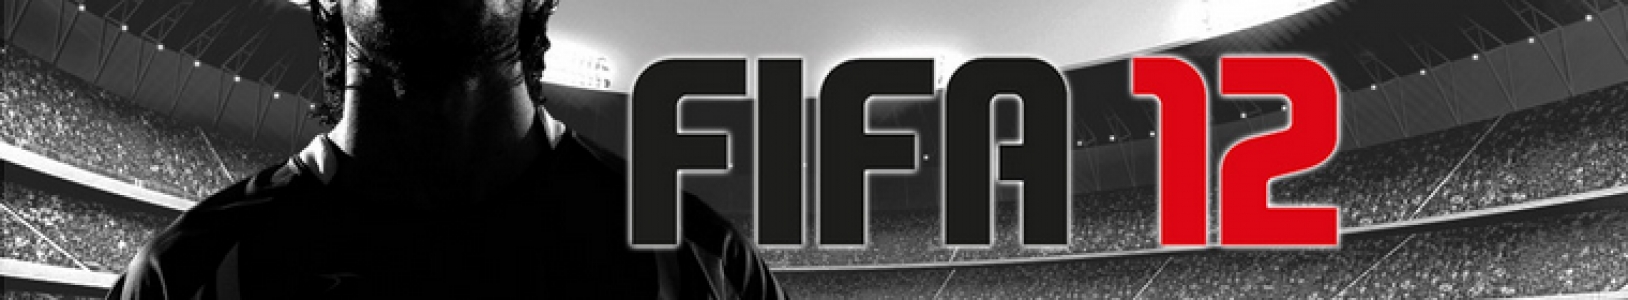 FIFA 12 banner